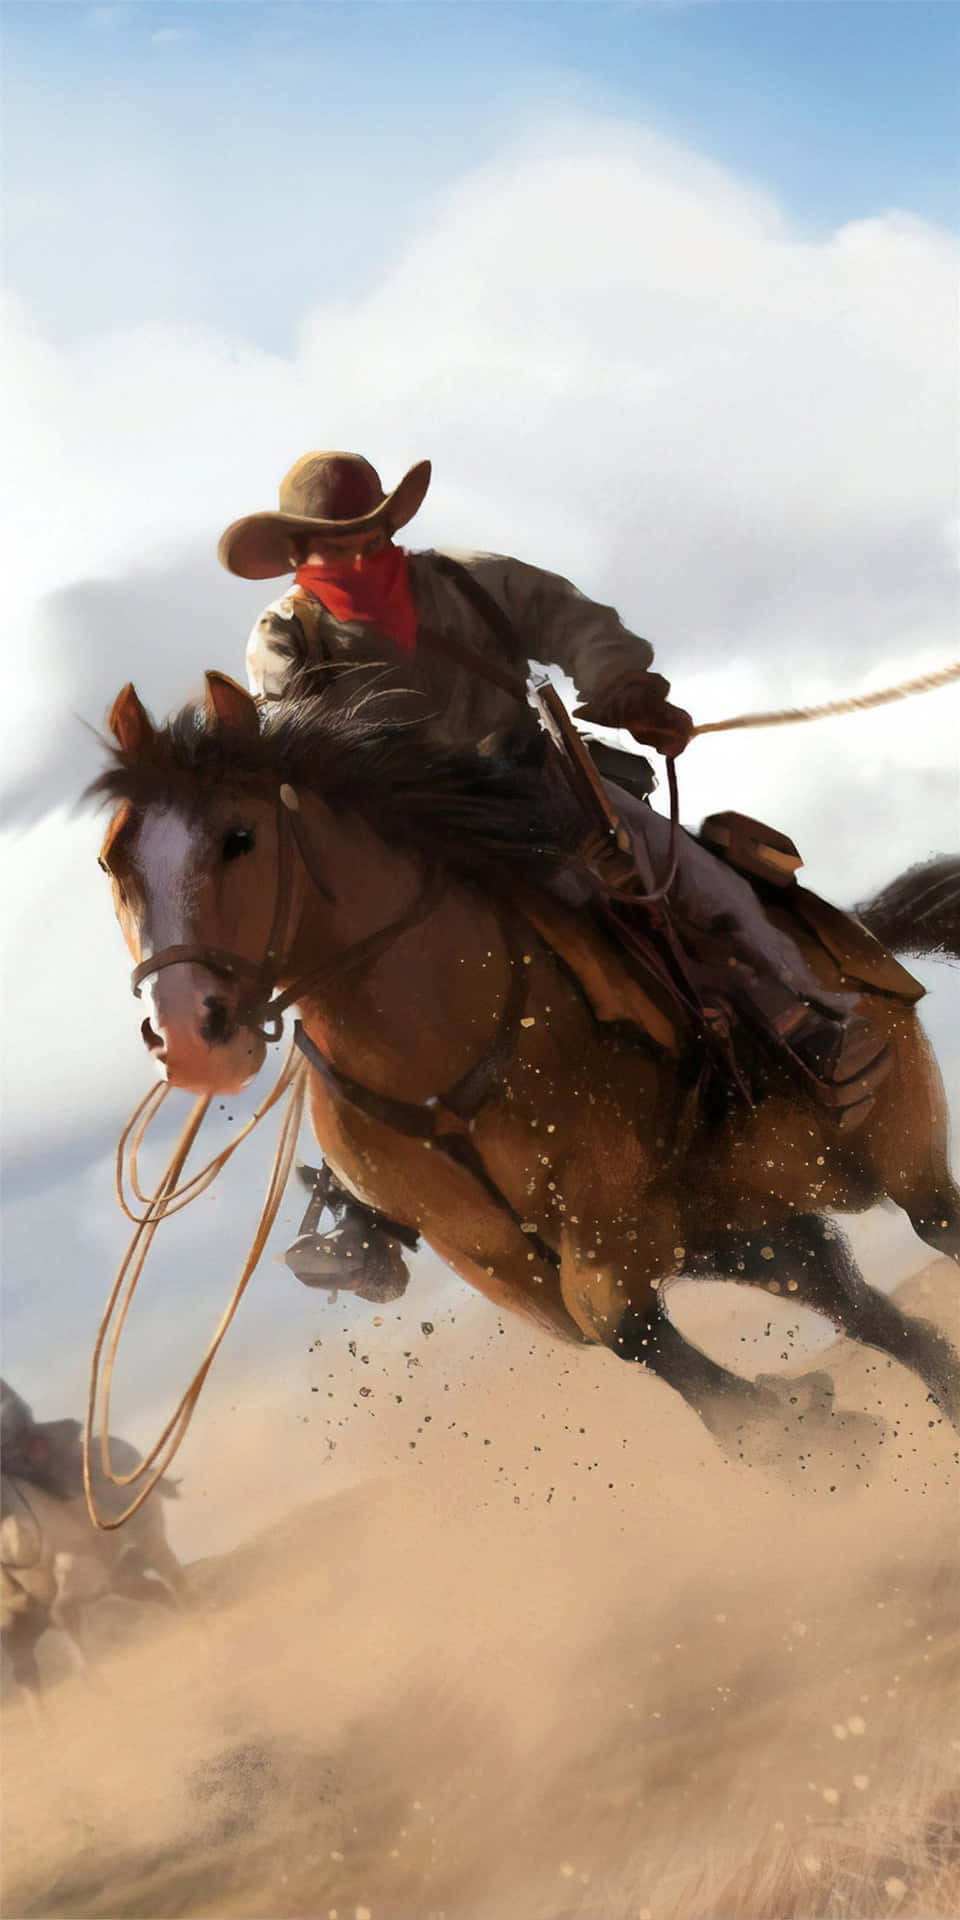 Pixel3 Red Dead Redemption 2 Bakgrundsbild Med En Cowboy Och En Röd Mask.